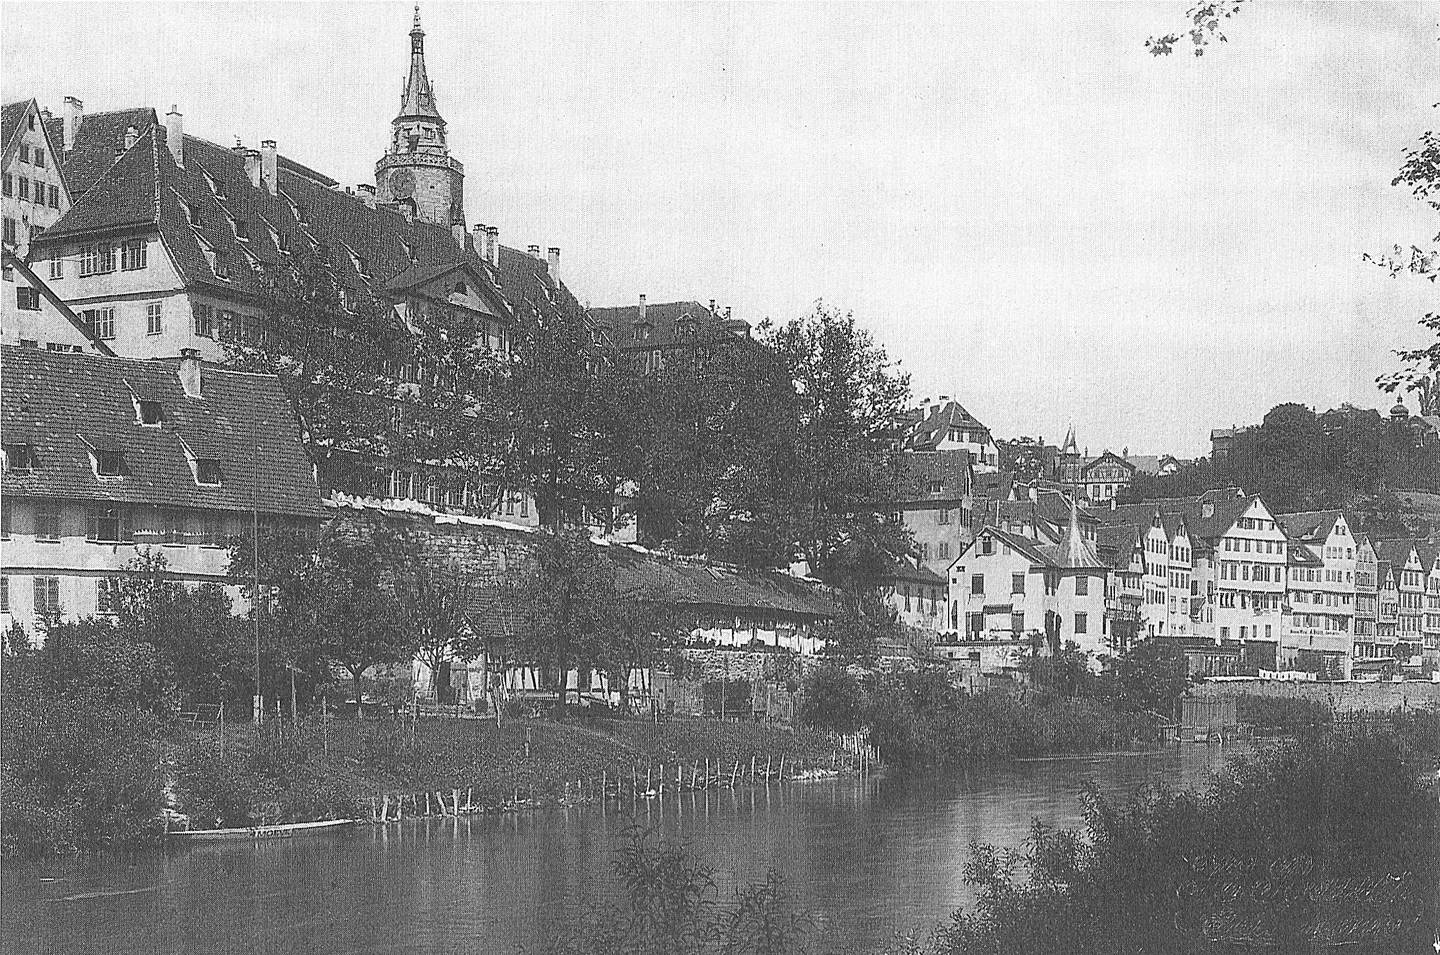 Landemerke: Neckarbad med Hölderlinturm ved elven Neckar i Tübingen, fra rundt 1900. I tårnværelset bodde Hölderlin i en årrekke.